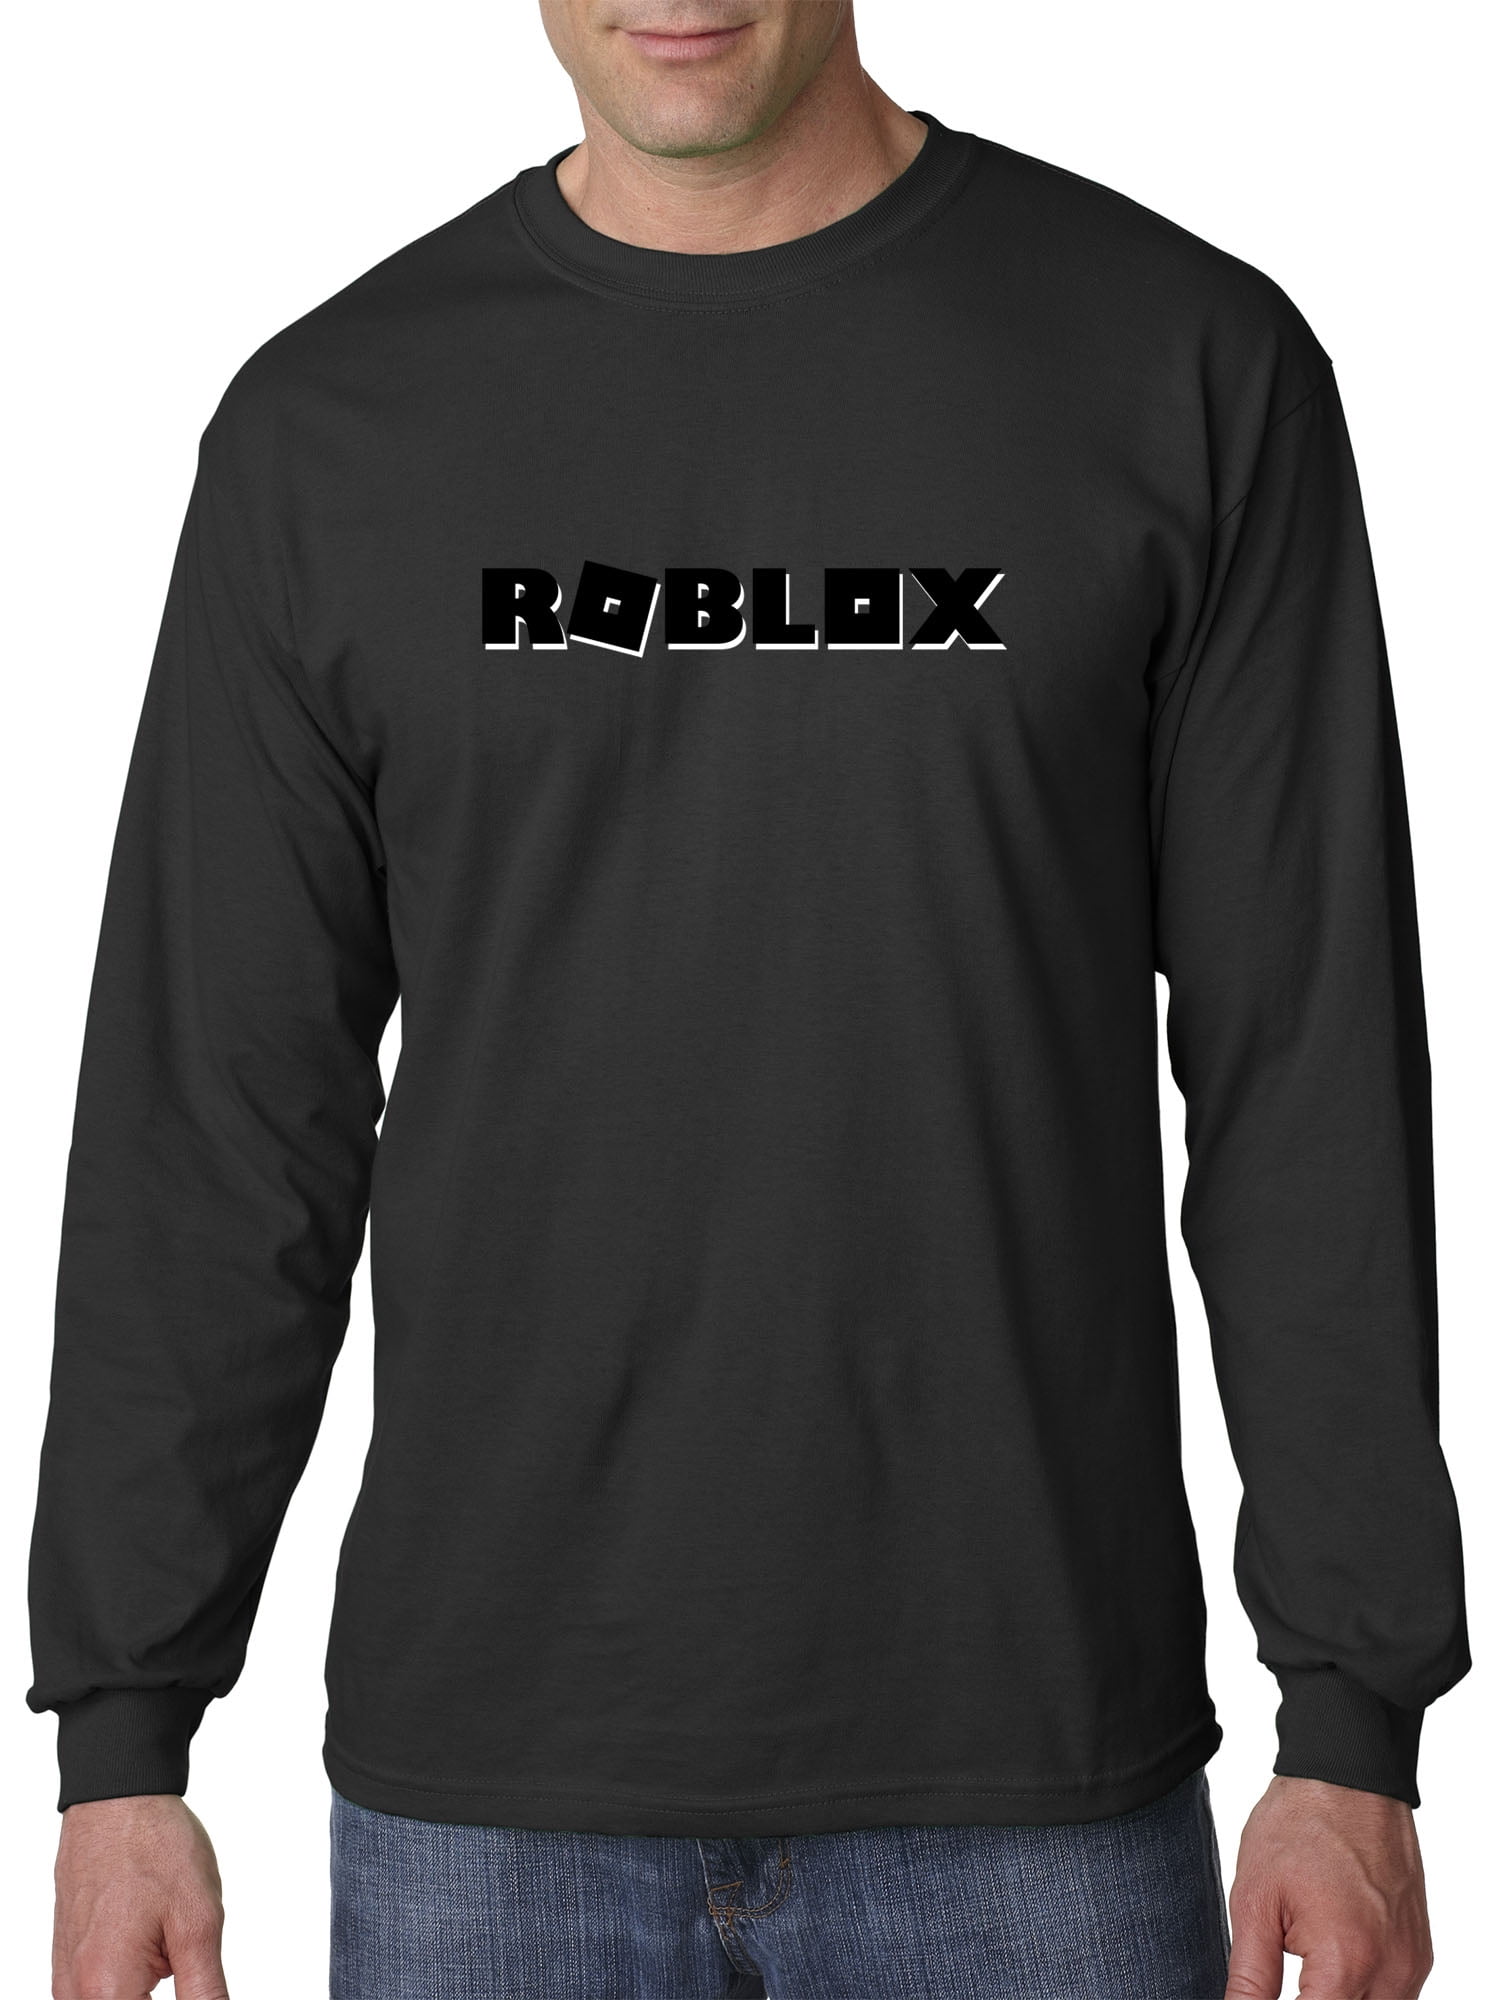 New Way New Way 1168 Unisex Long Sleeve T Shirt Roblox Block Logo Game Accent 4xl Black Walmart Com - white gucci shirt roblox